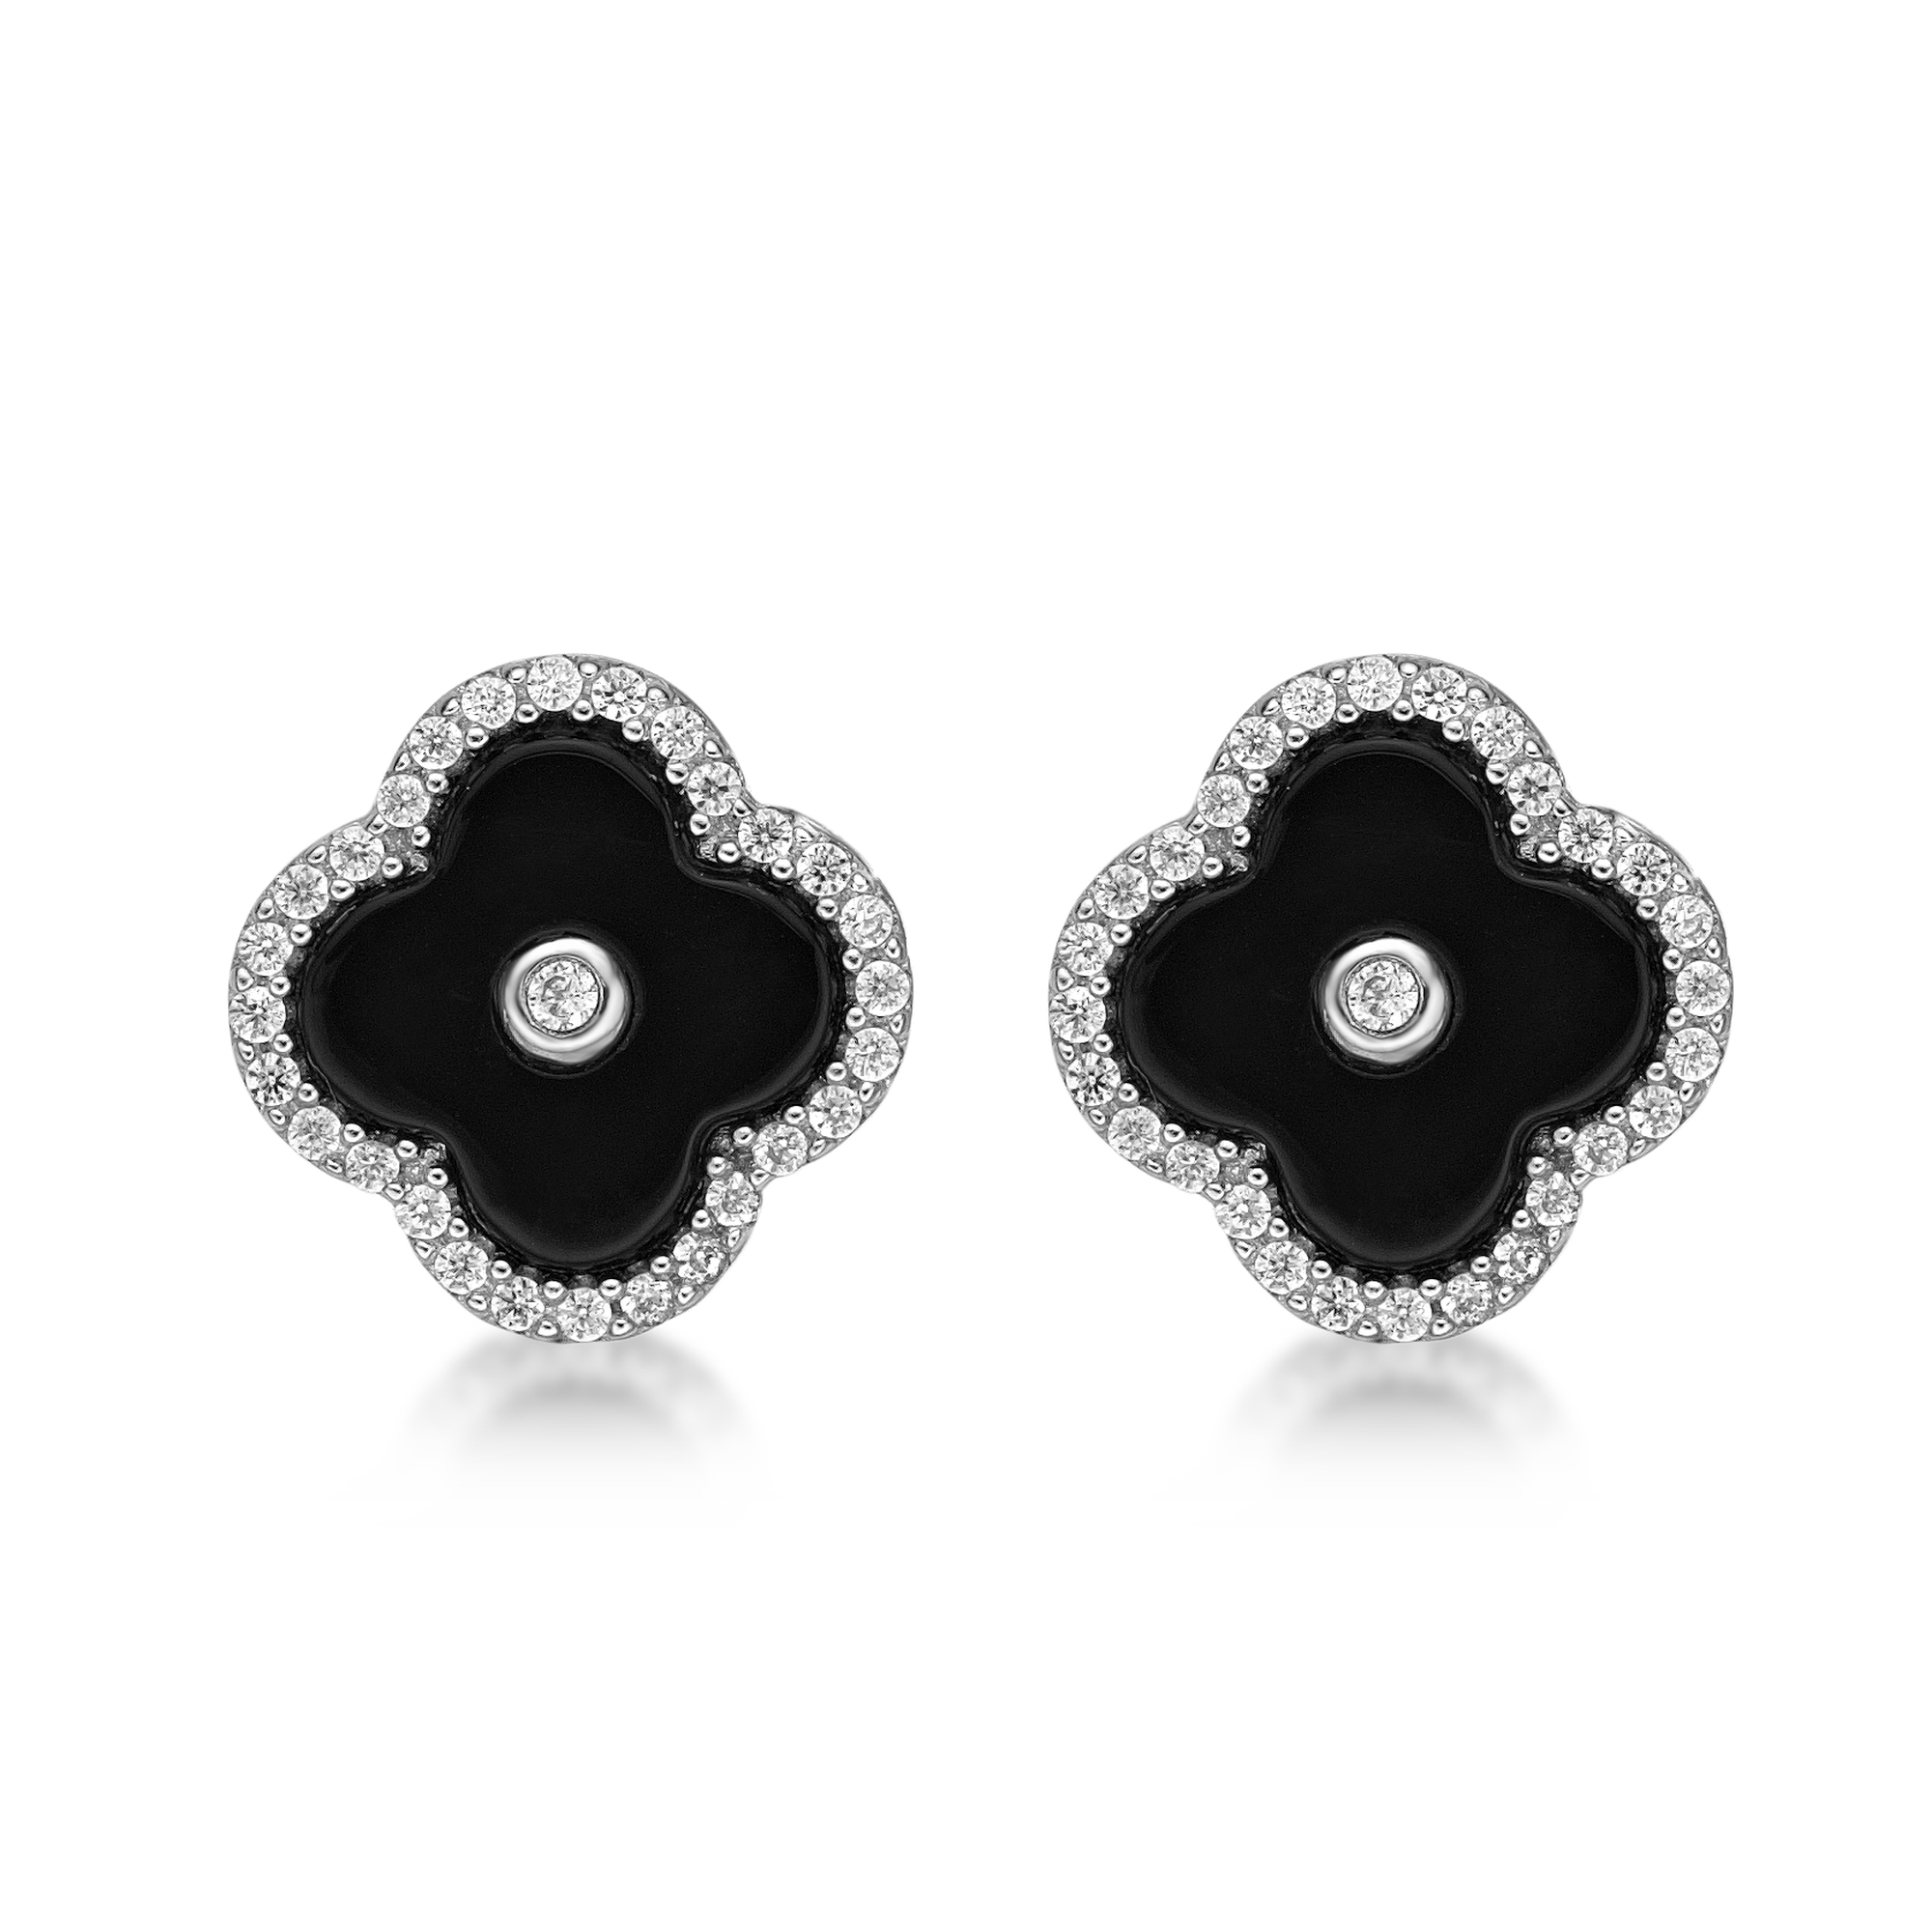 Lavari Jewelers Women's Black Onyx Flower Stud Earrings with Post Back, 925 Sterling Silver, Cubic Zirconia